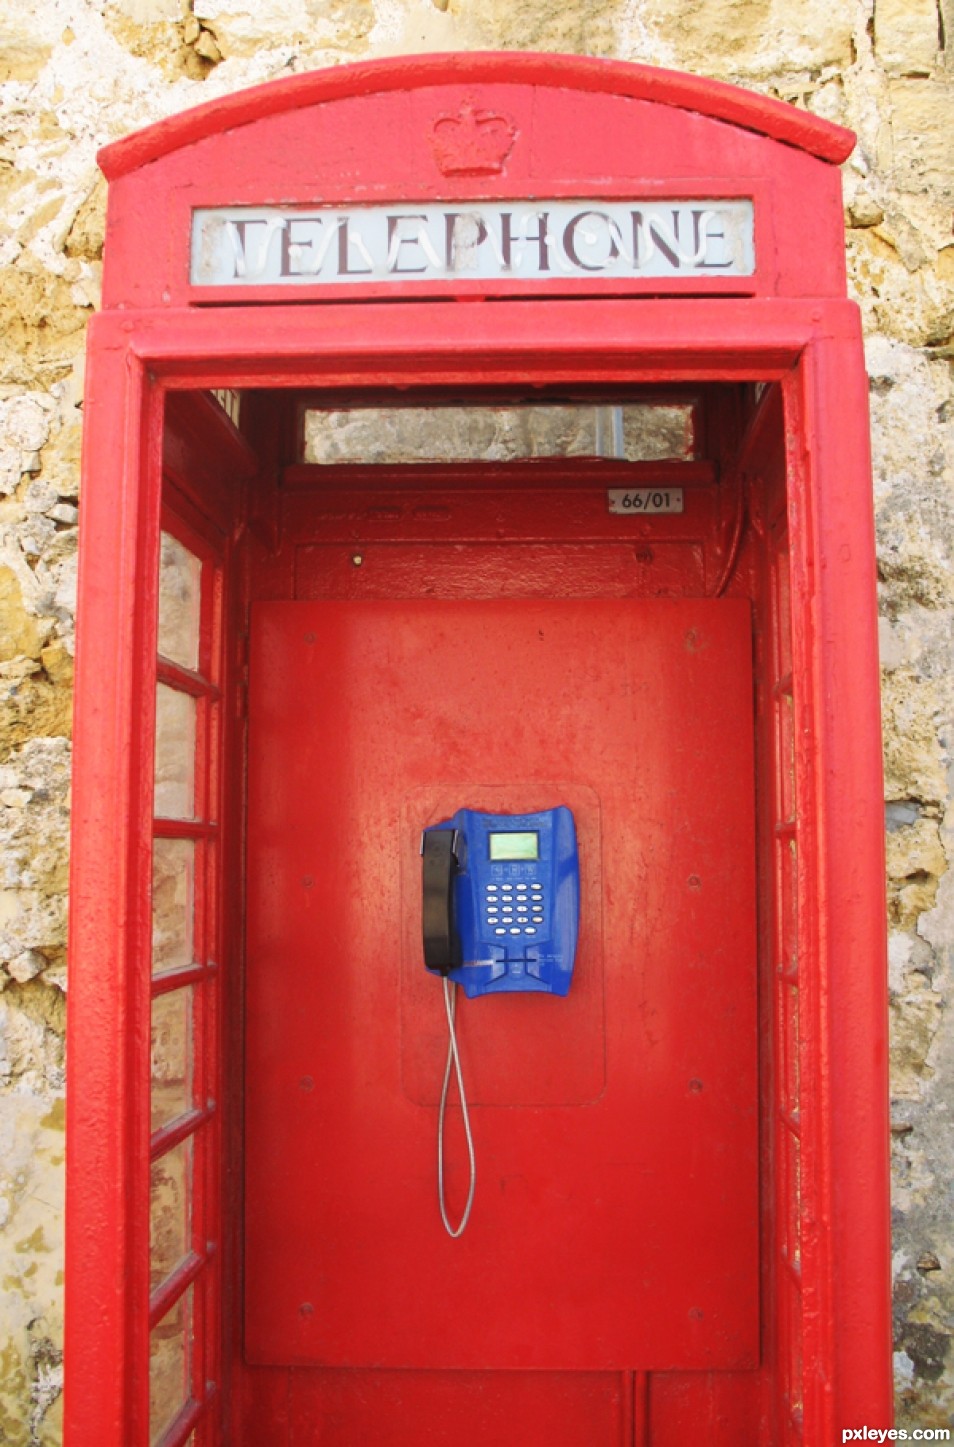 The telephone box